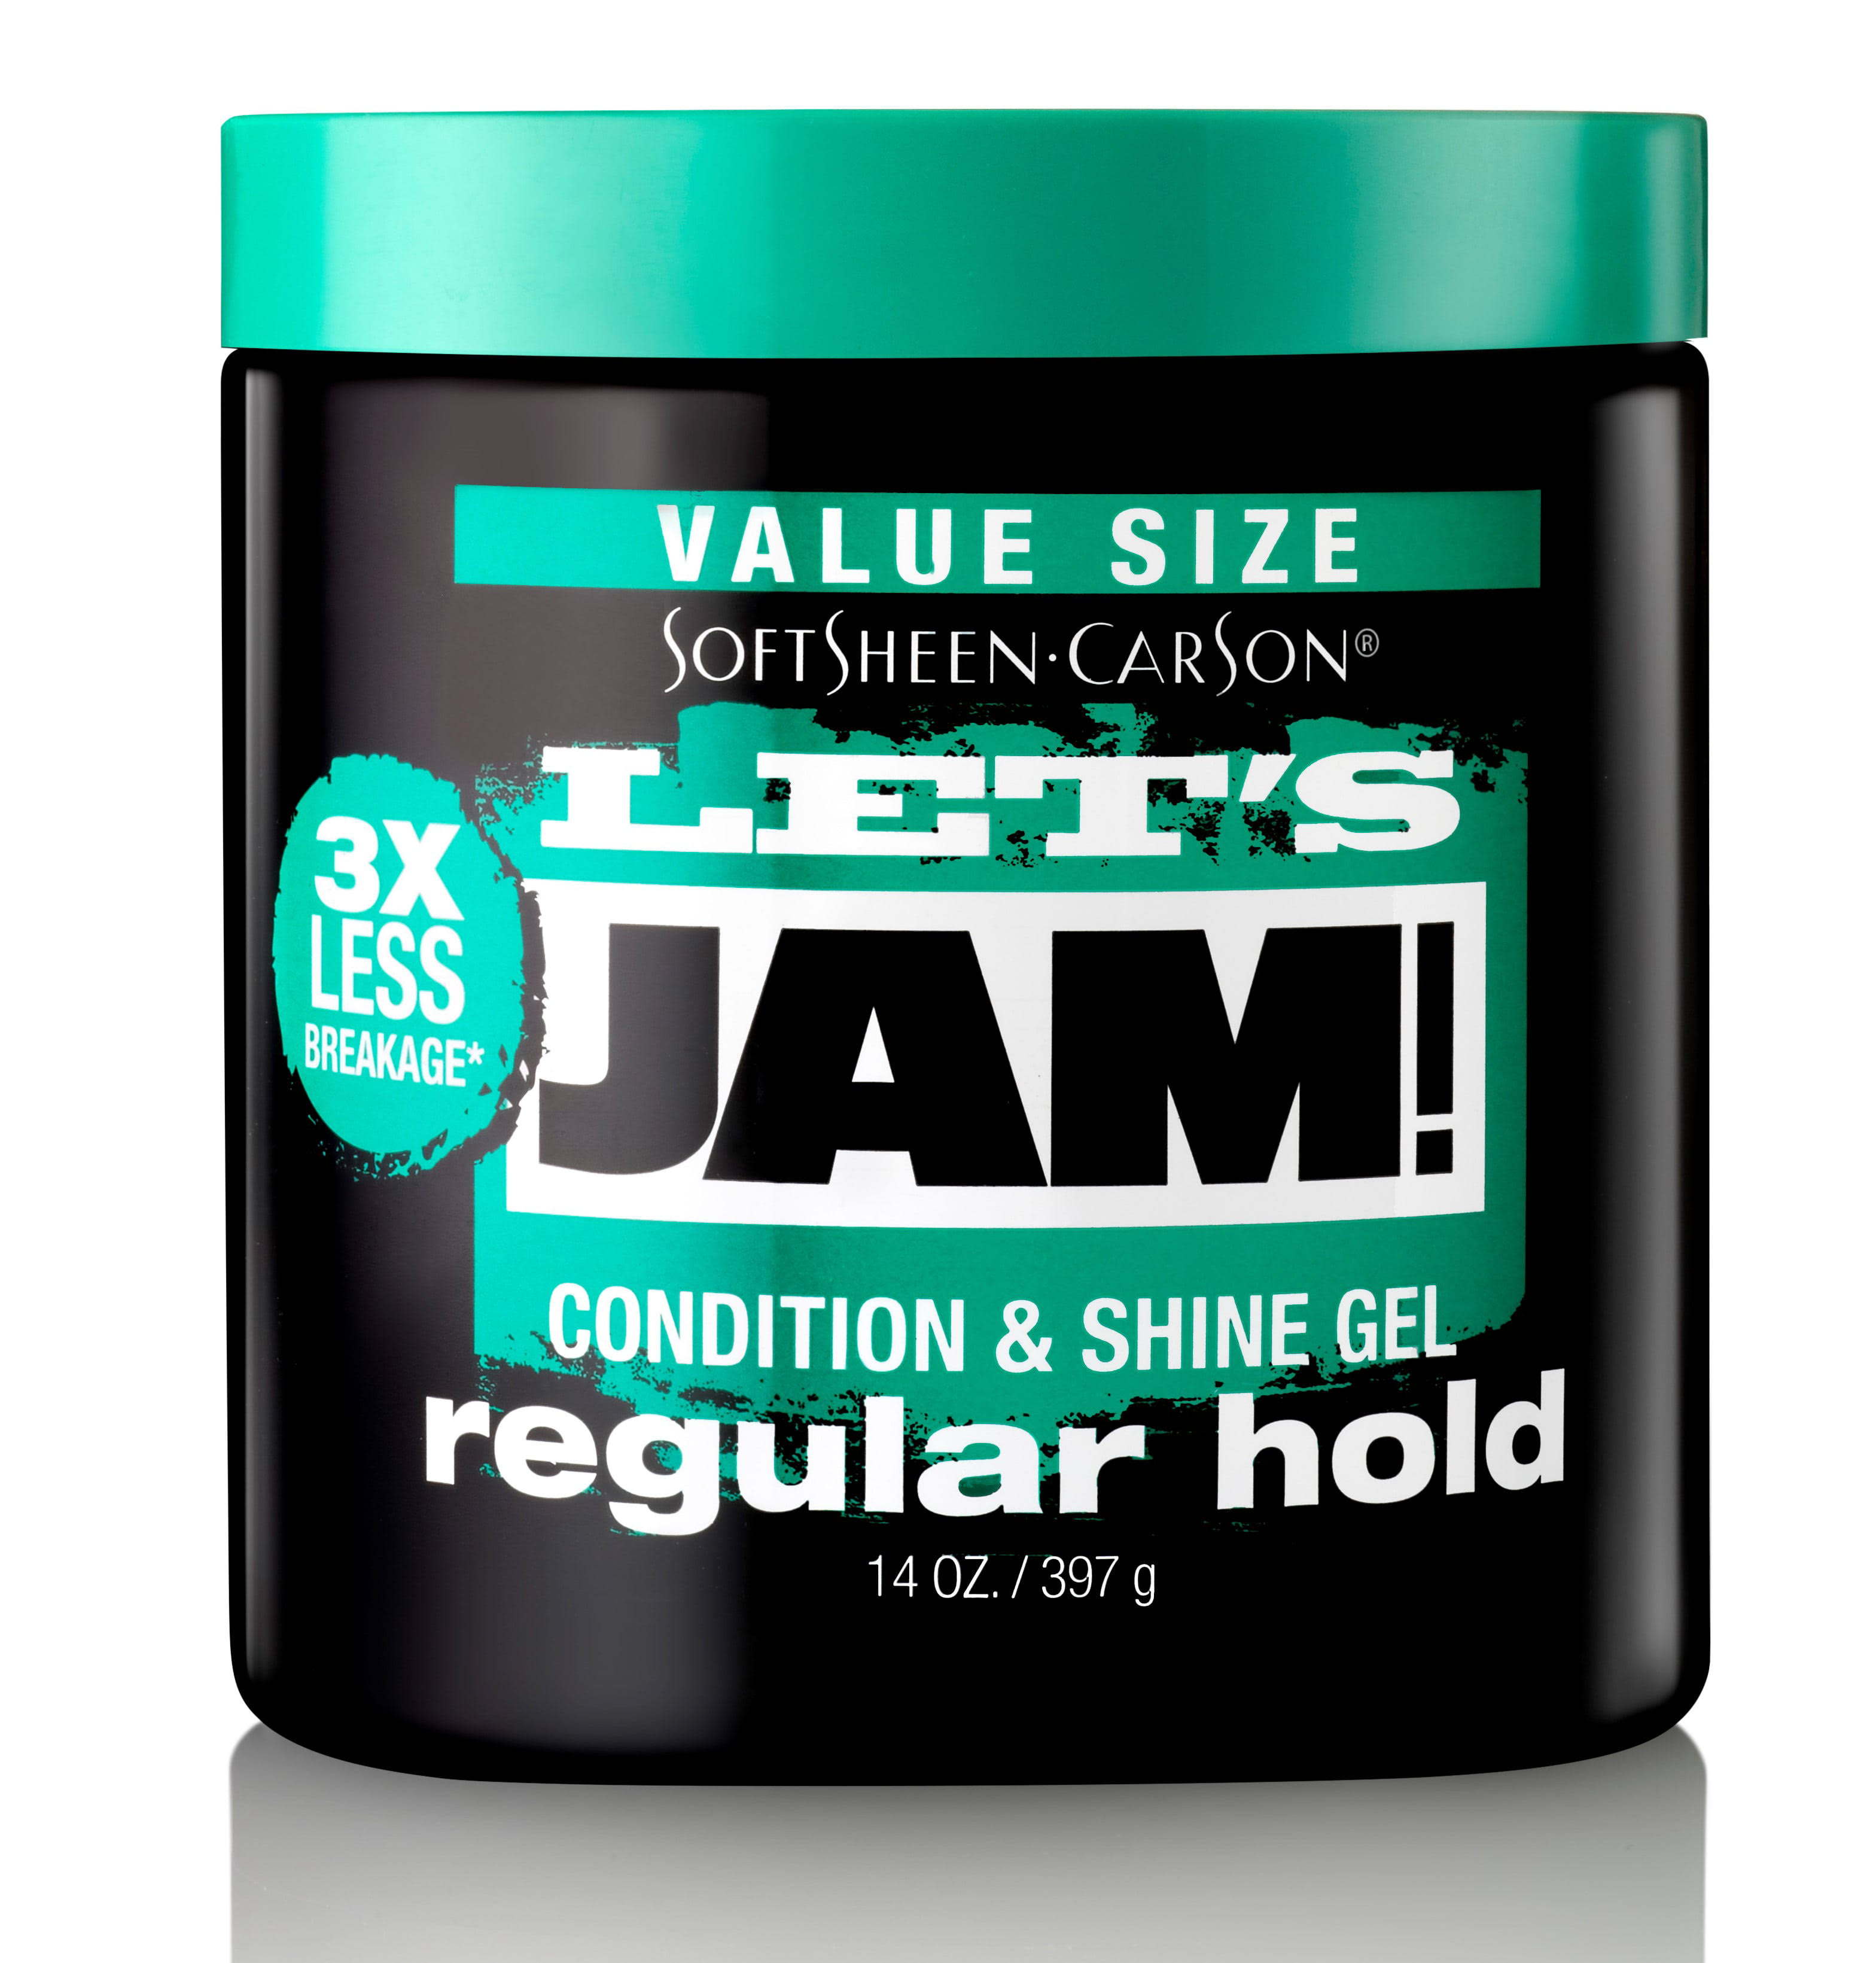 Soft Sheen-Carson Let's Jam Shining & Conditioning Gel - Regular Hold, 396g